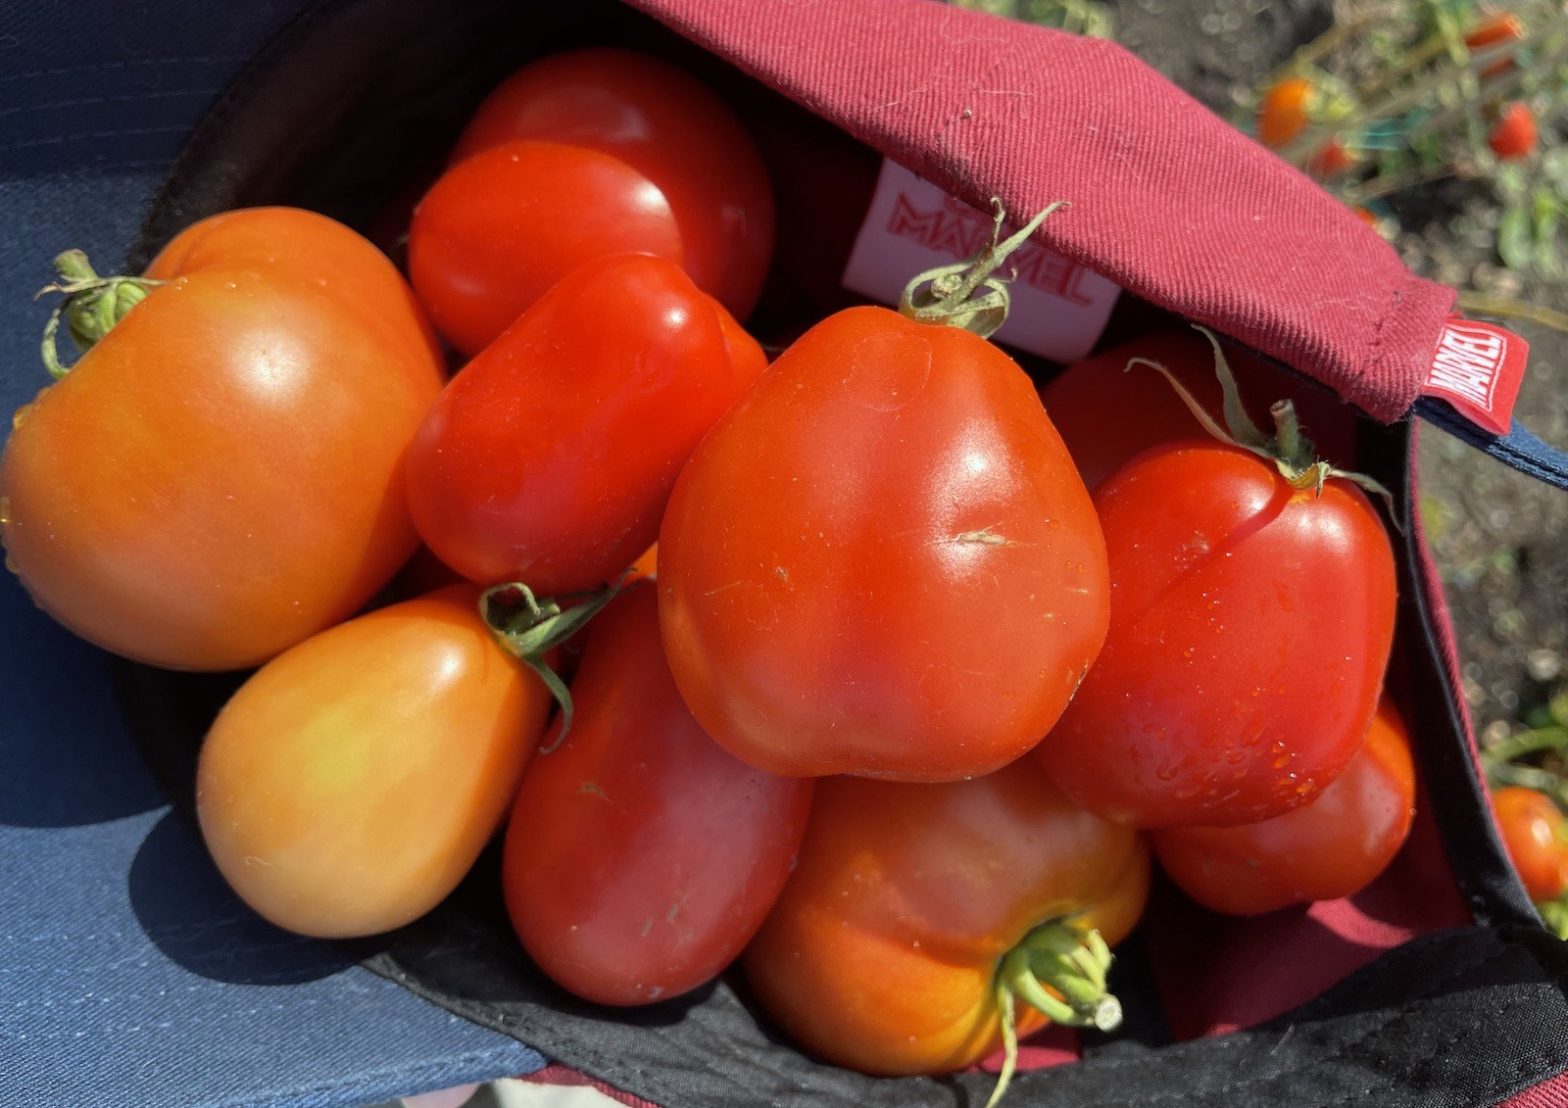 A bushel of medium-sized tomatoes, in a Captain Marvel baseball cap.